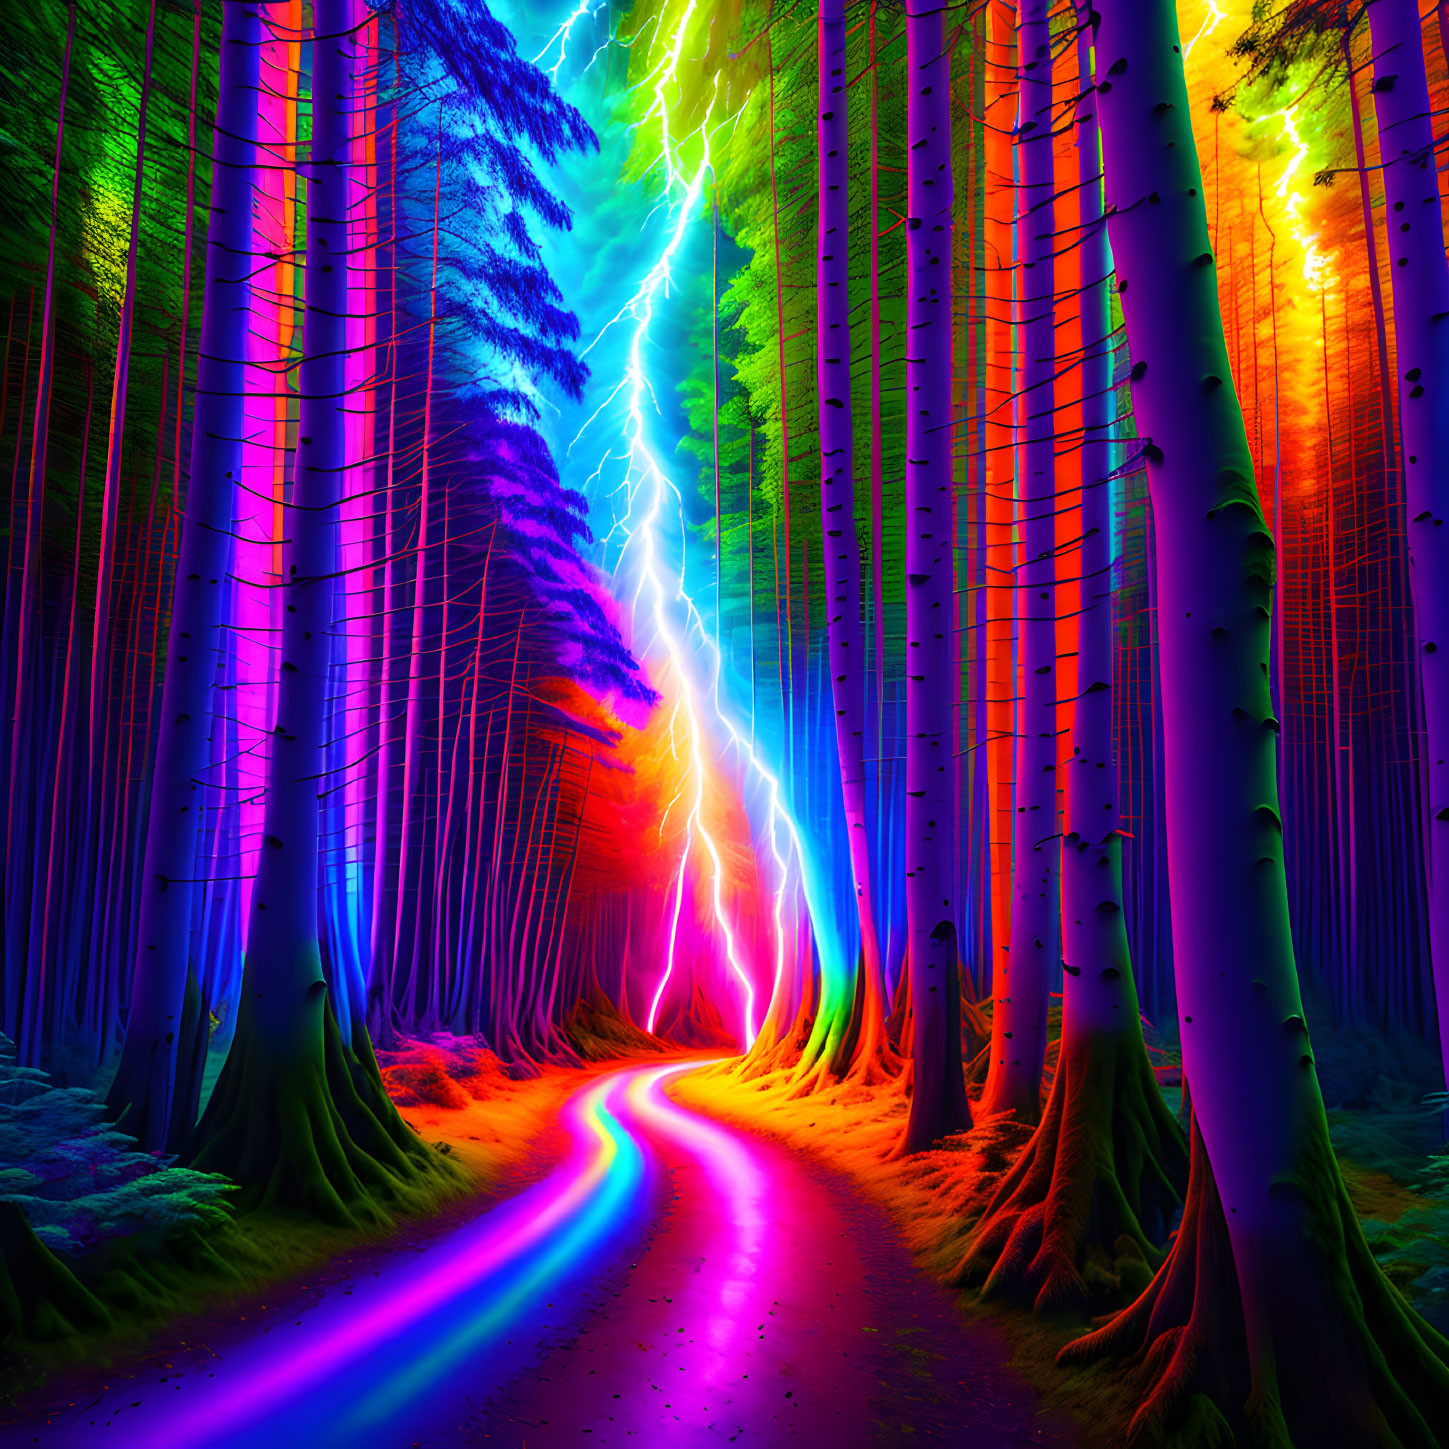 Unrainbow Psychetropic Lightning Forest Grove